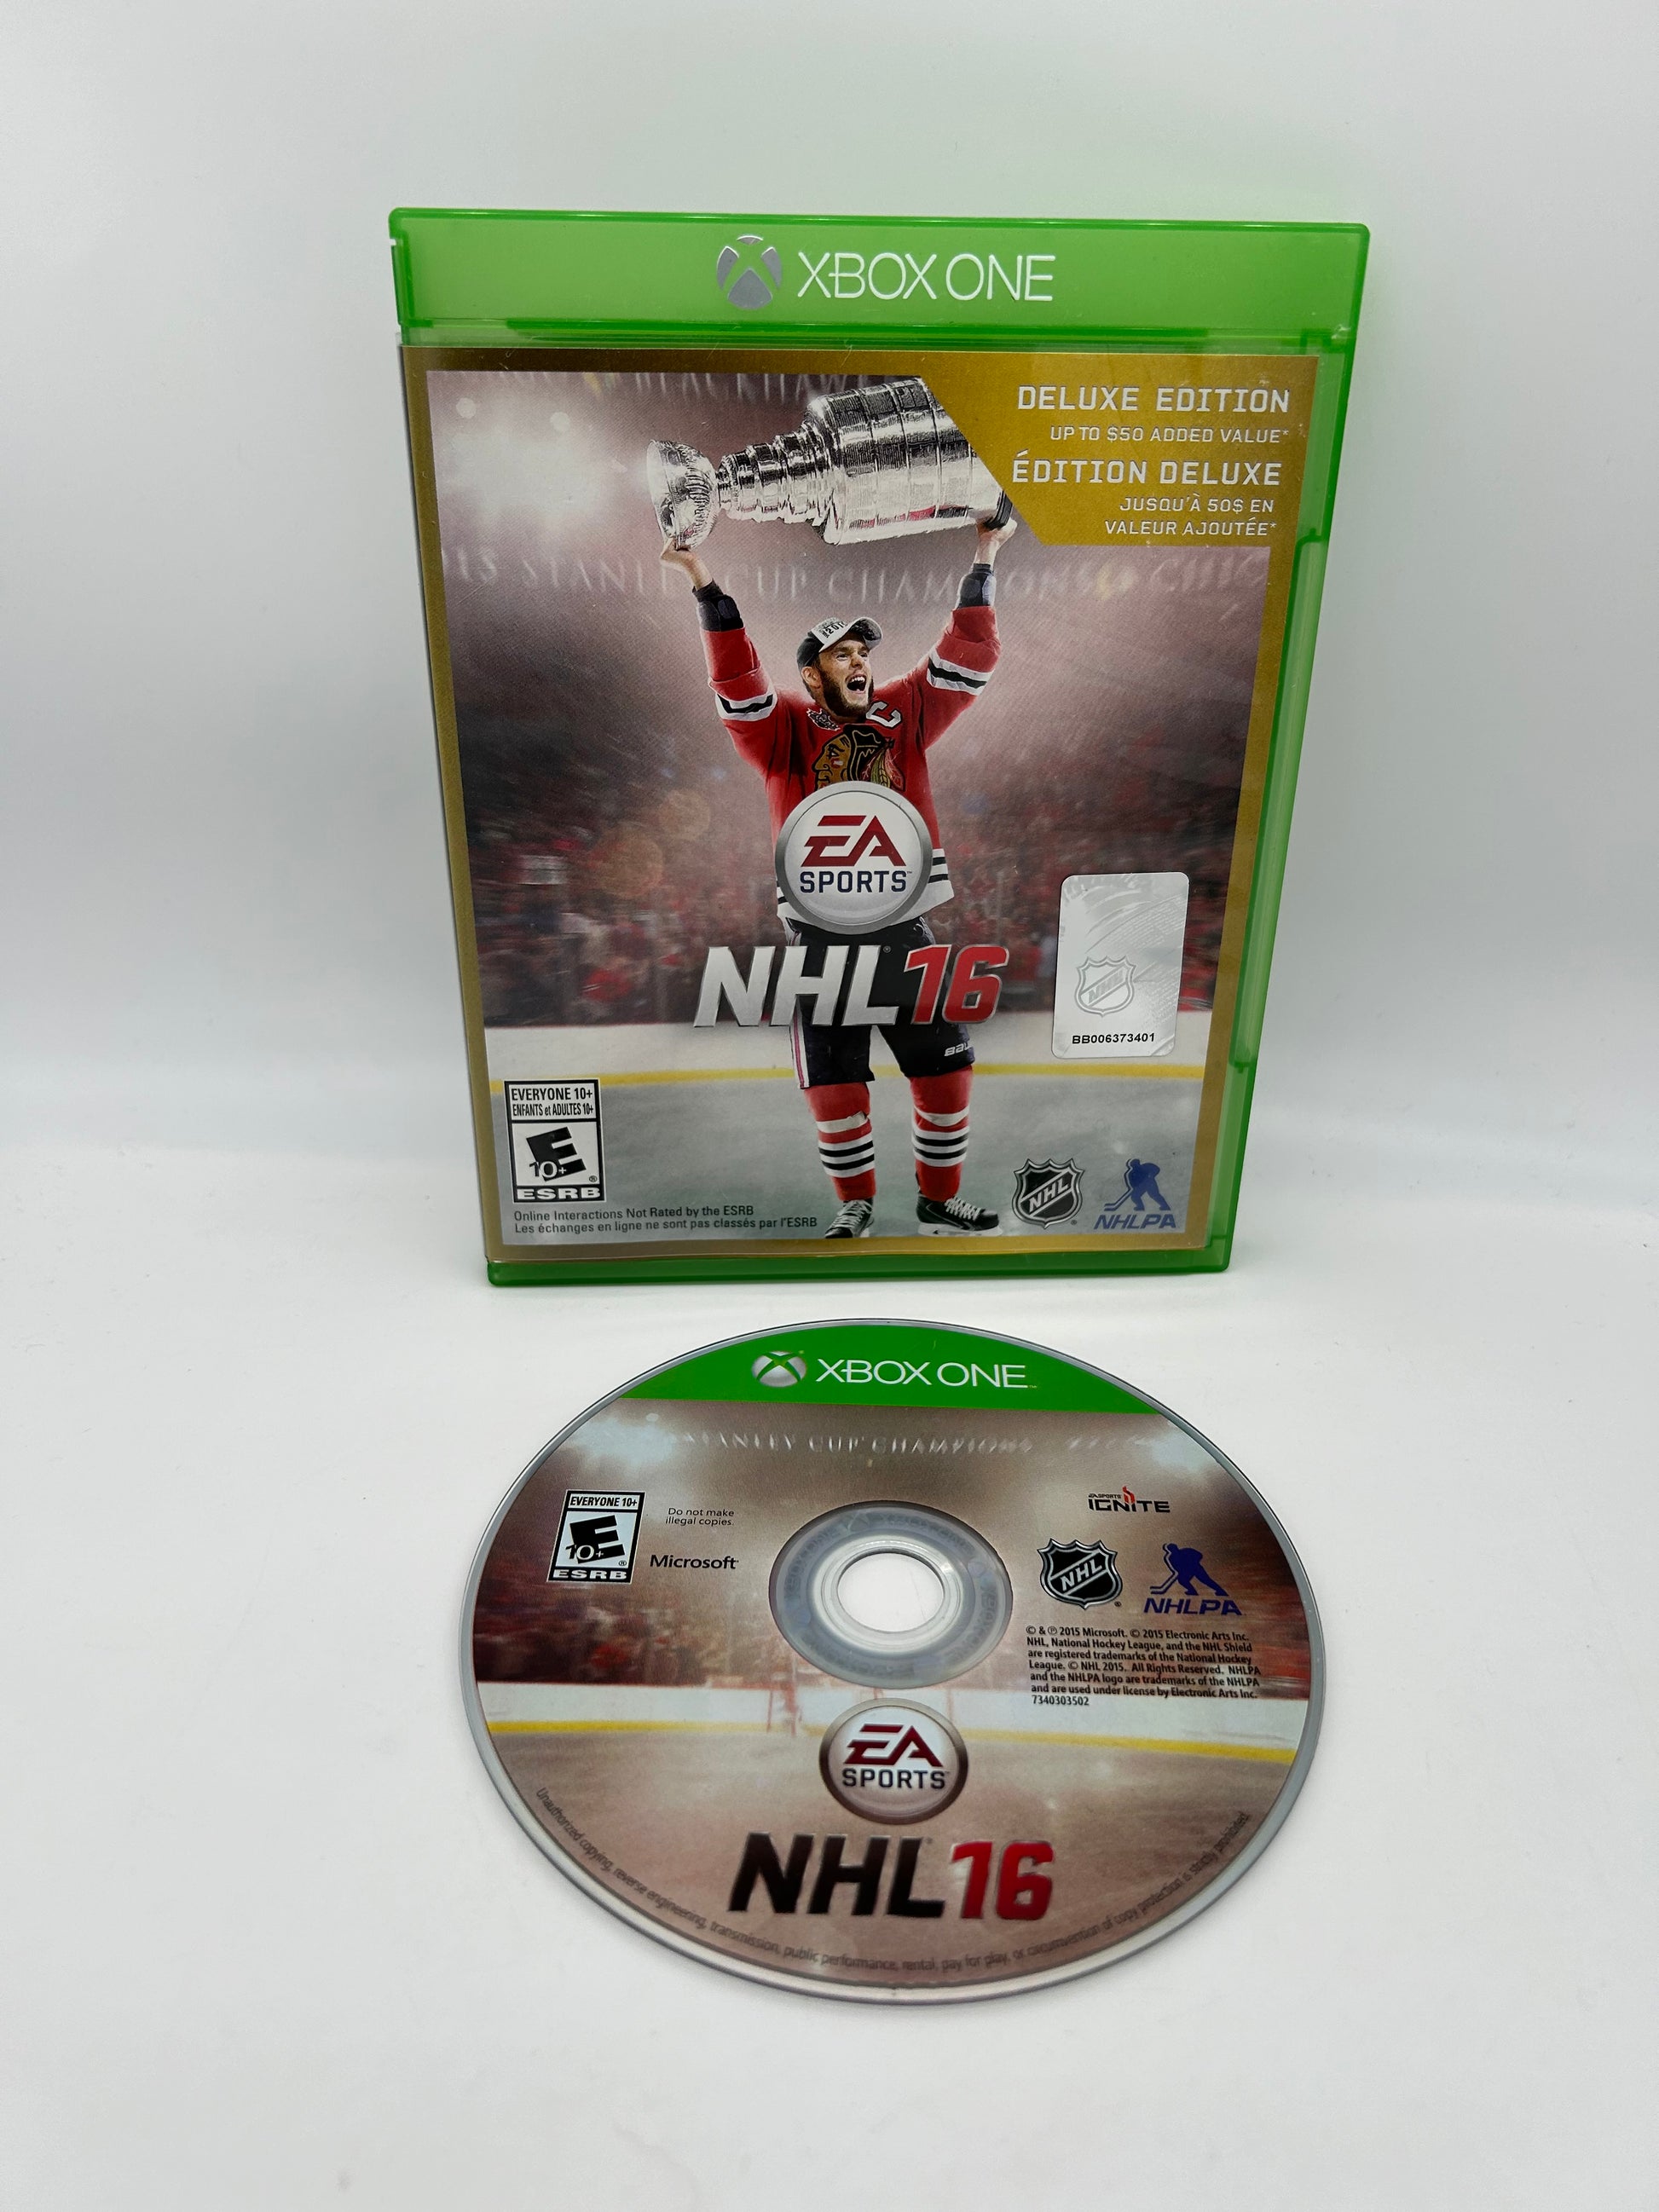 PiXEL-RETRO.COM : MICROSOFT XBOX ONE COMPLETE CIB BOX MANUAL GAME NTSC NHL 16 DELUXE EDITION